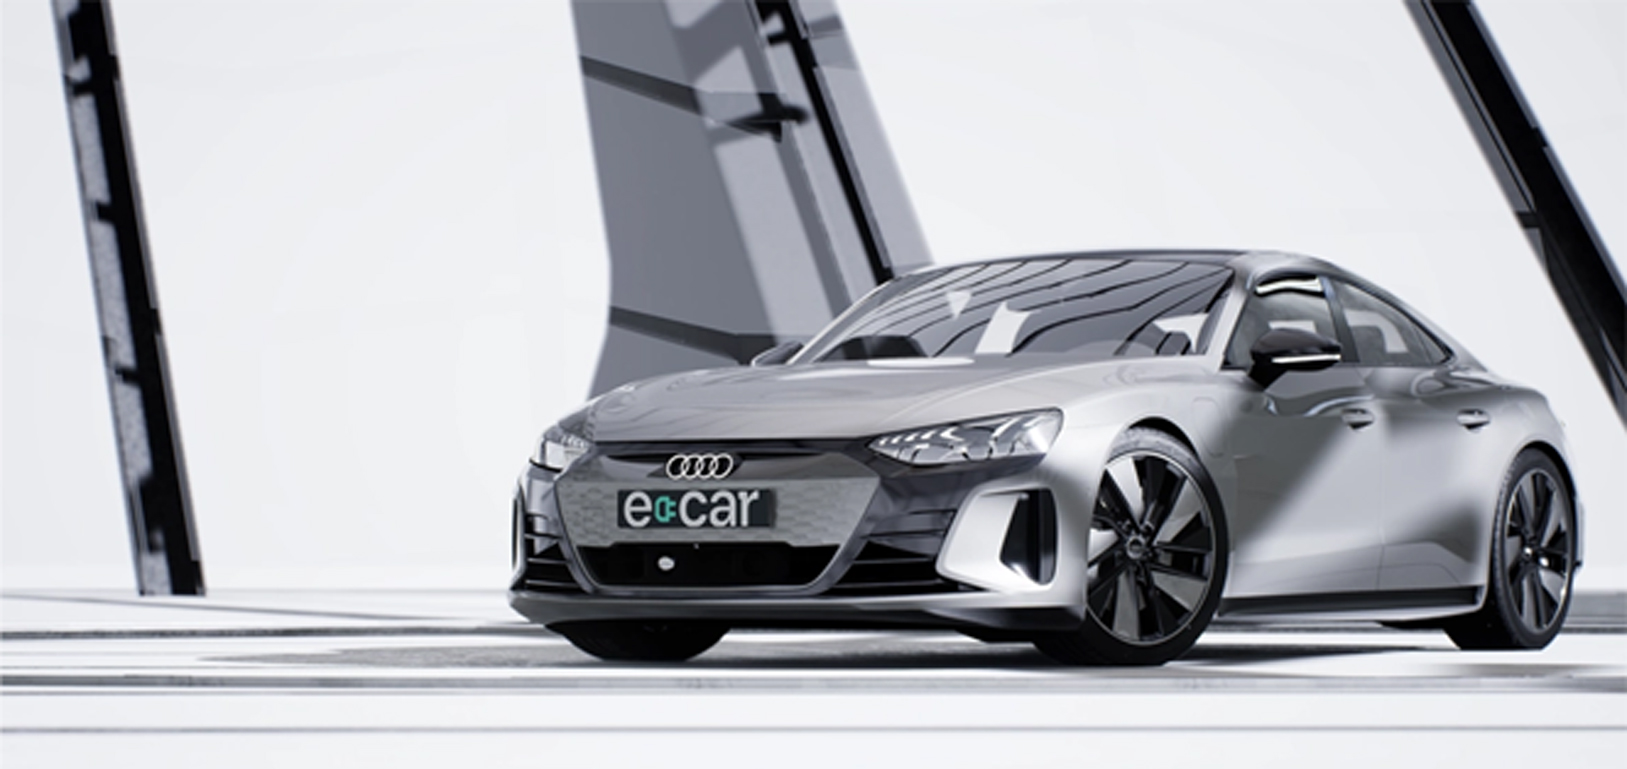 Audi Q4 e-tron 40 review - Zapmap